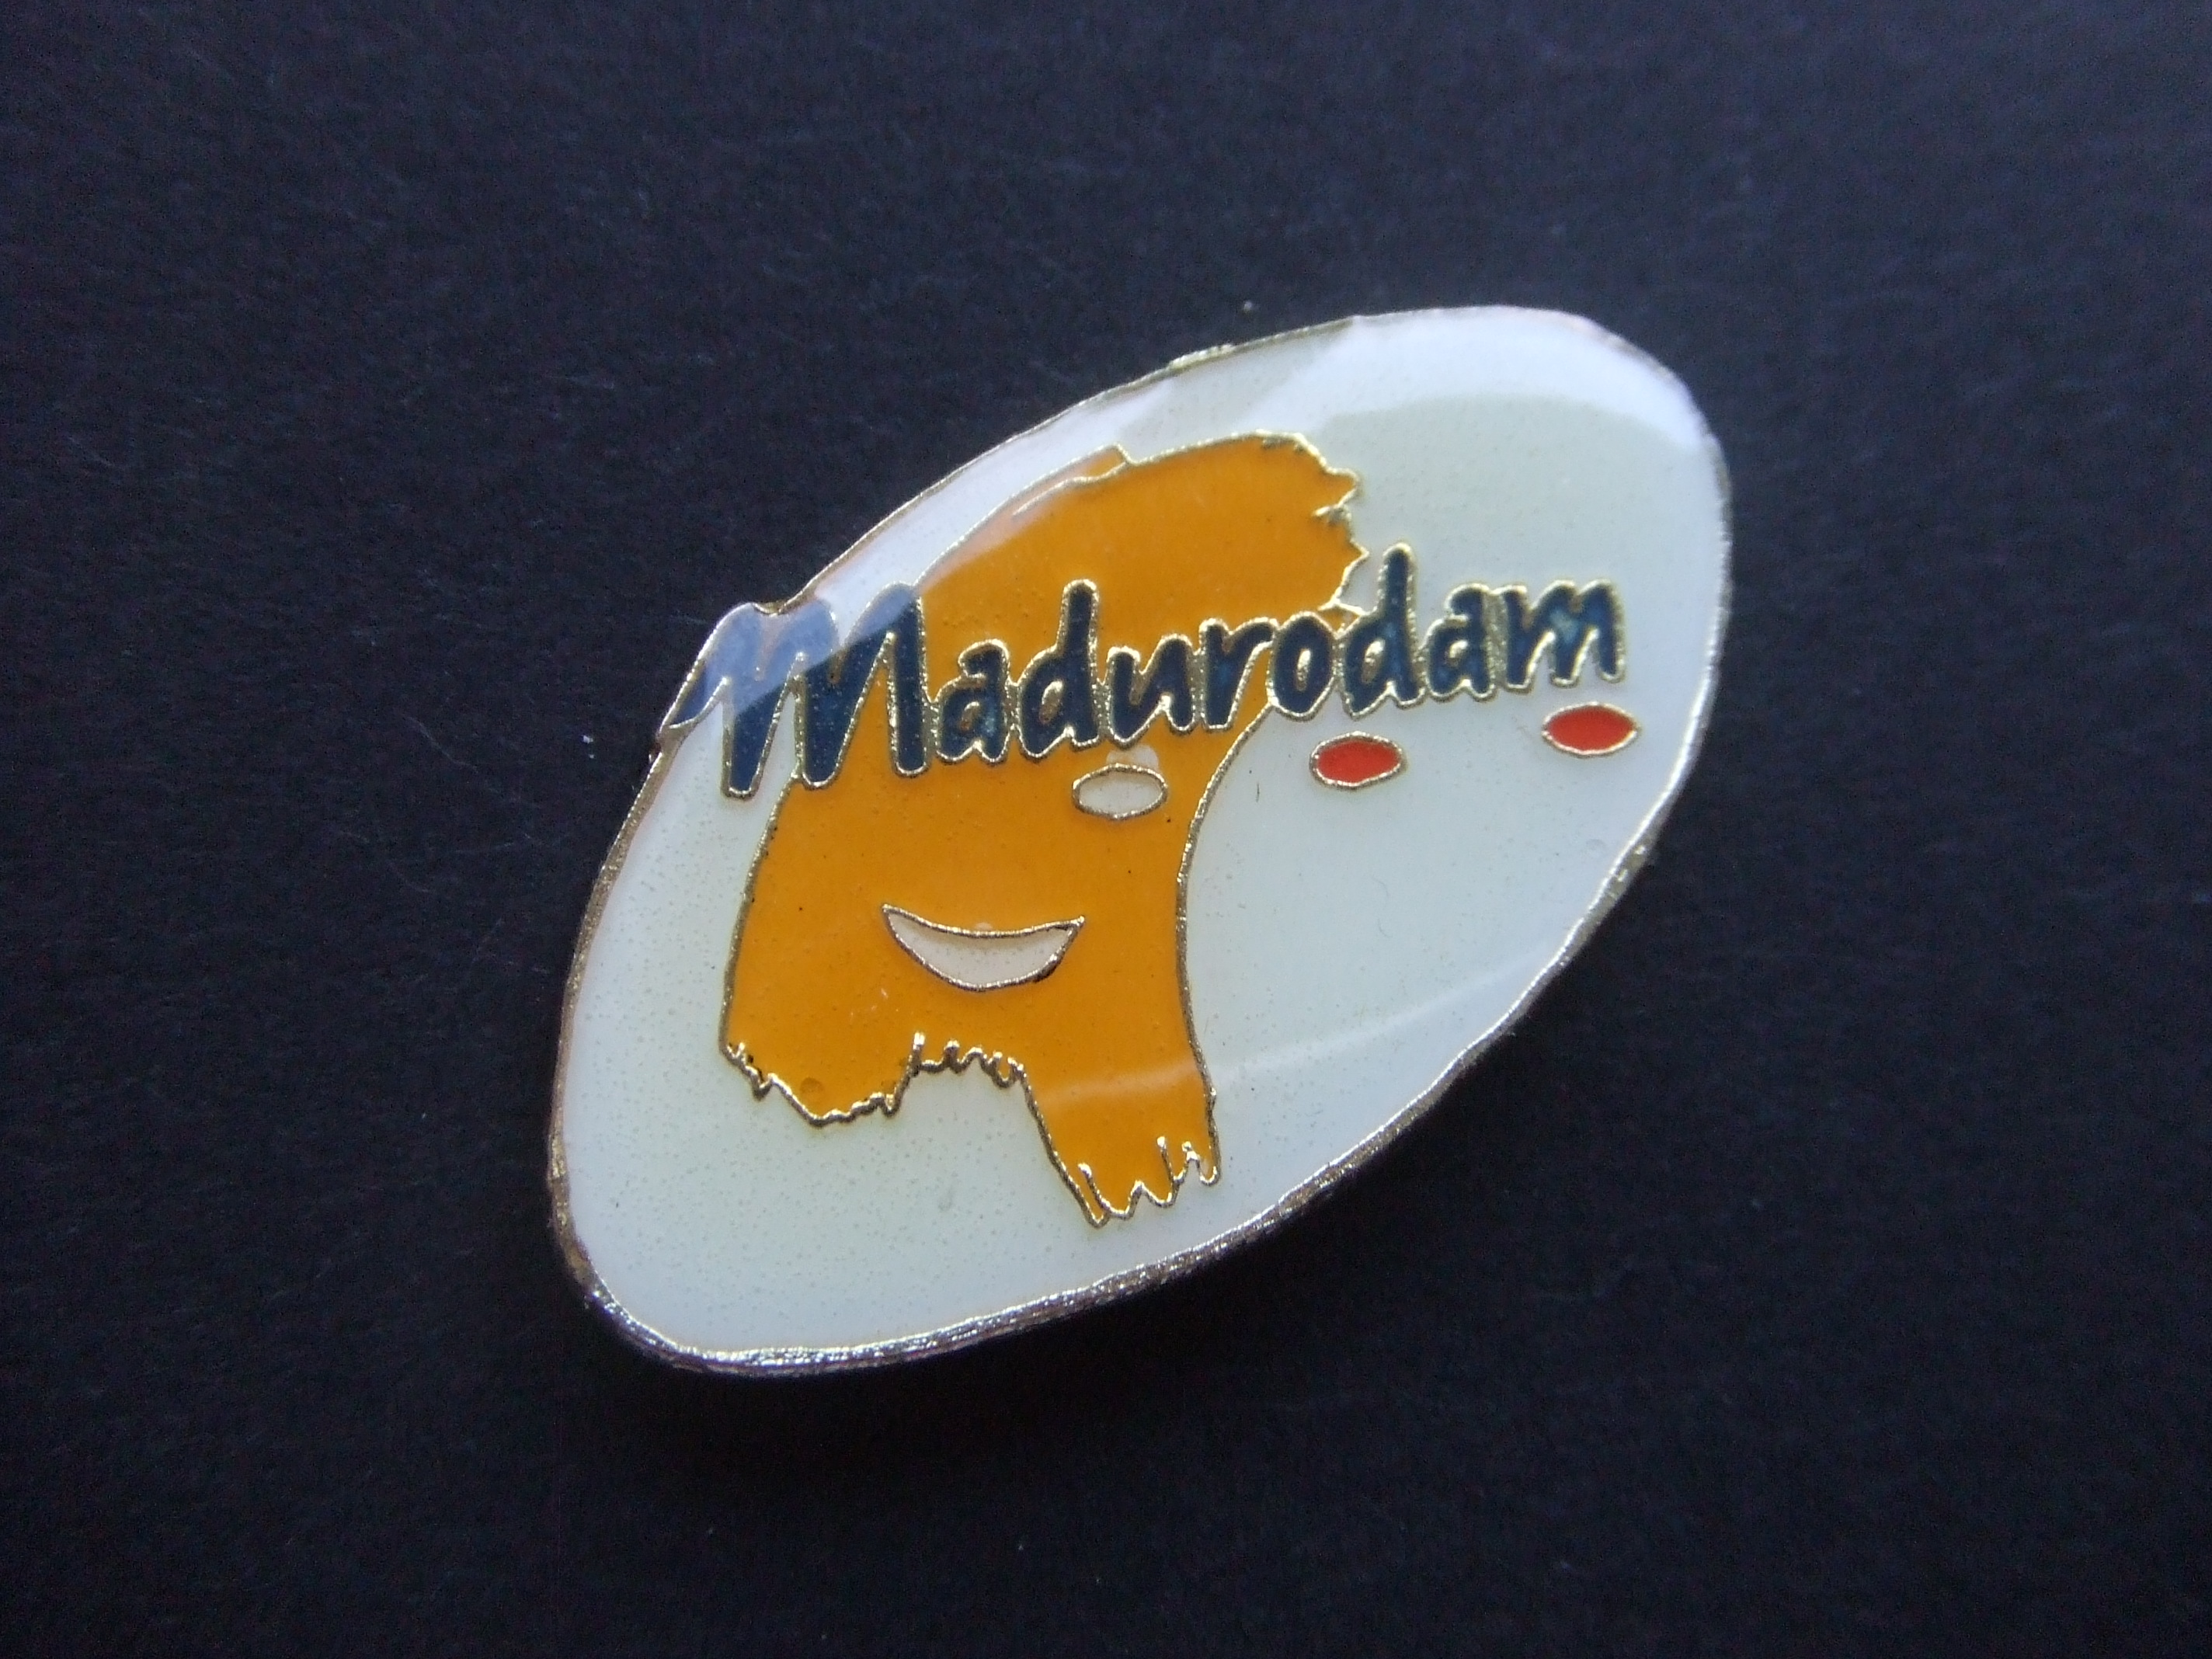 Madurodam miniatuurstad in Den Haag